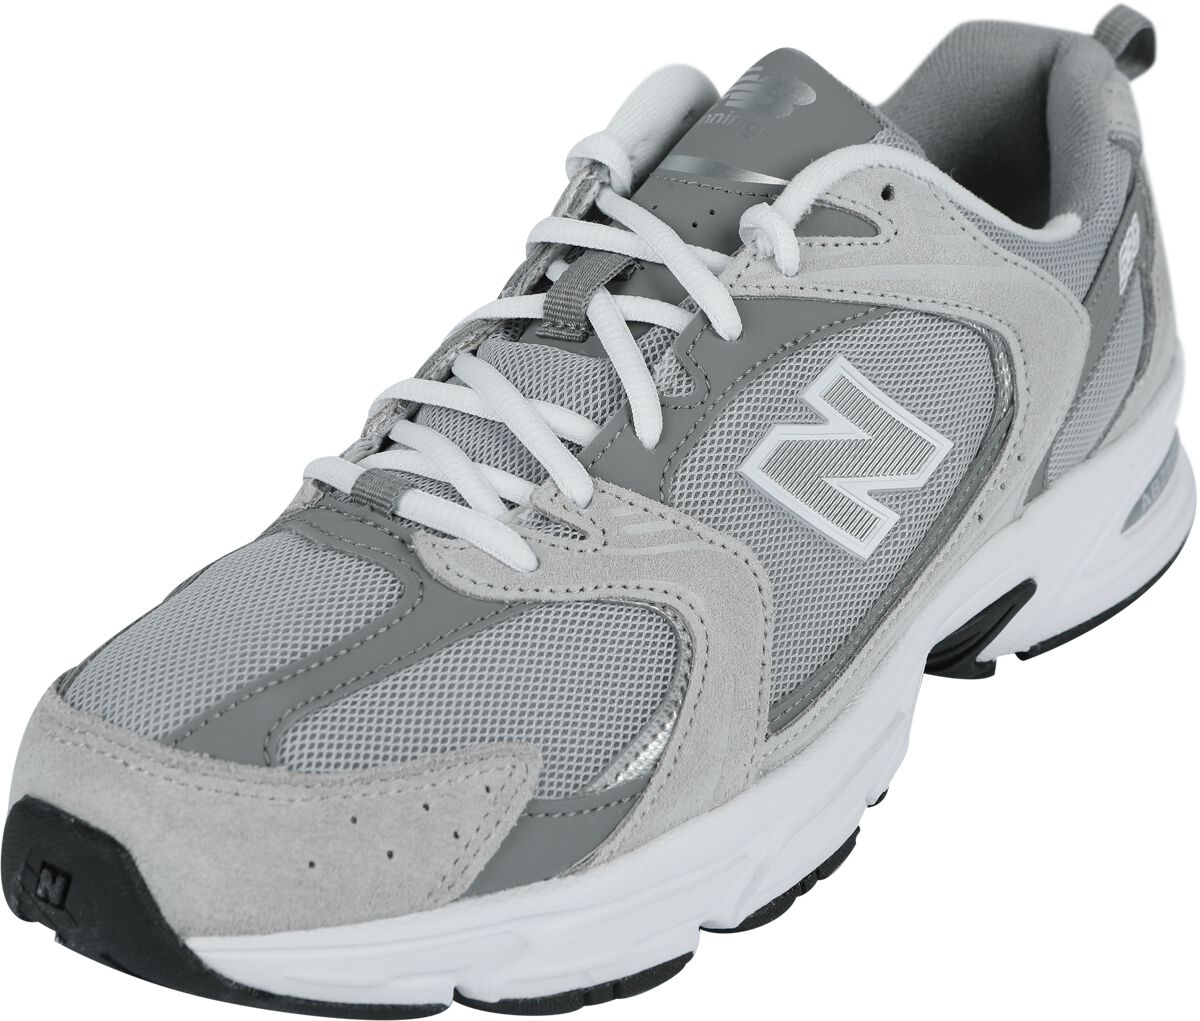 New Balance Sneaker - 530 - EU41 bis 5 - für Männer - Größe EU42 - grau